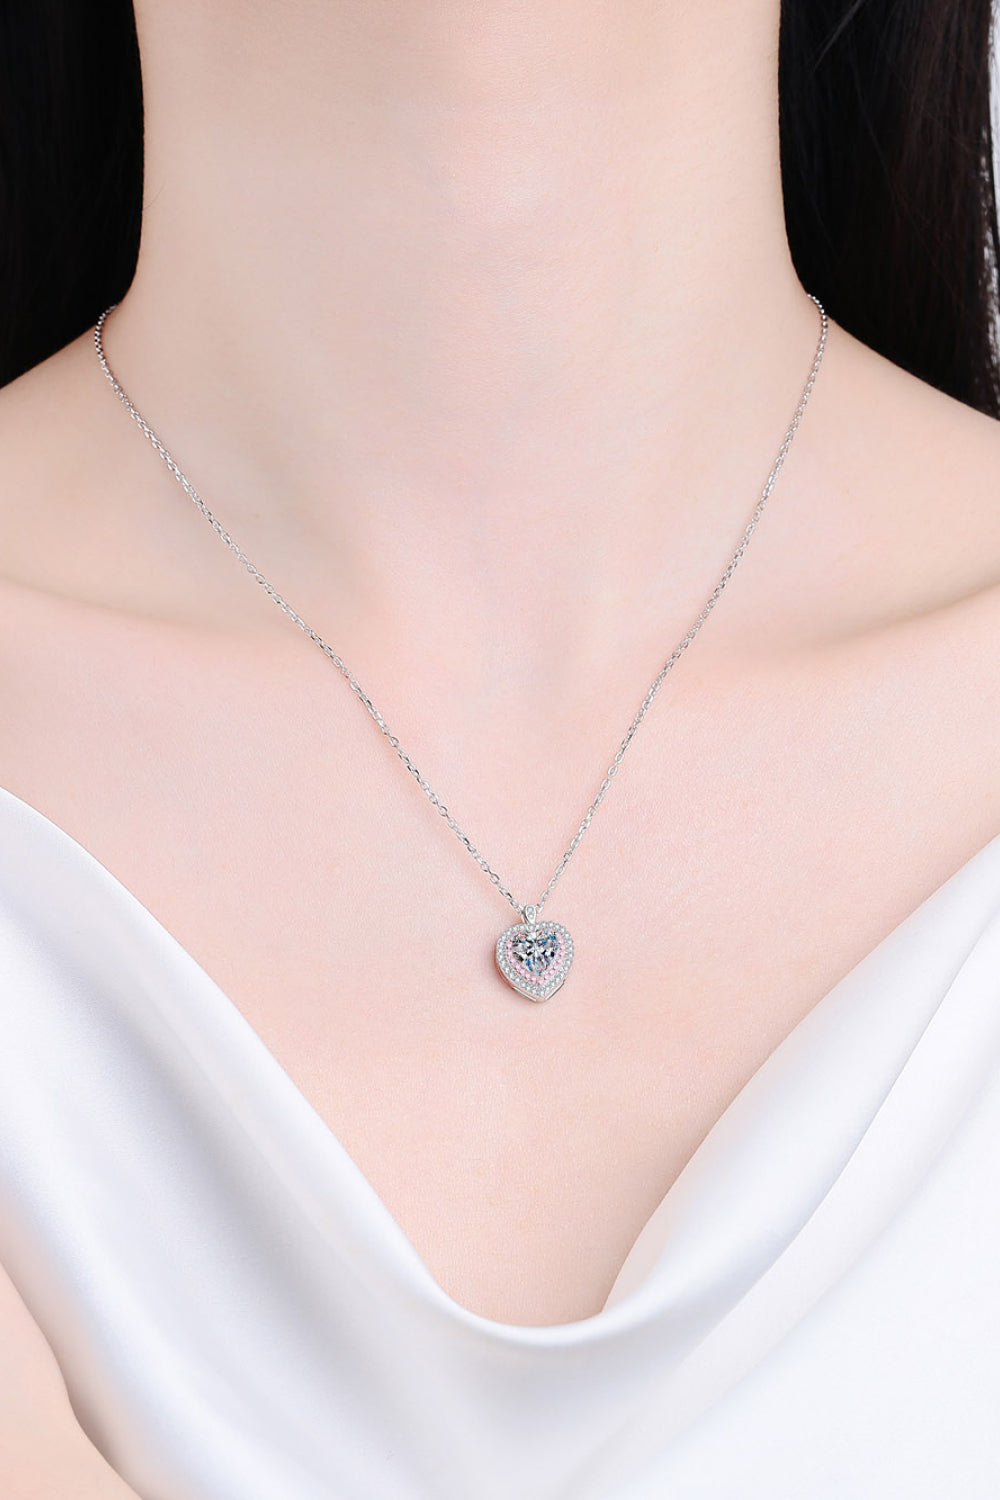 925 Sterling Silver 1 Carat Moissanite Heart Pendant Necklace-Ever Joy